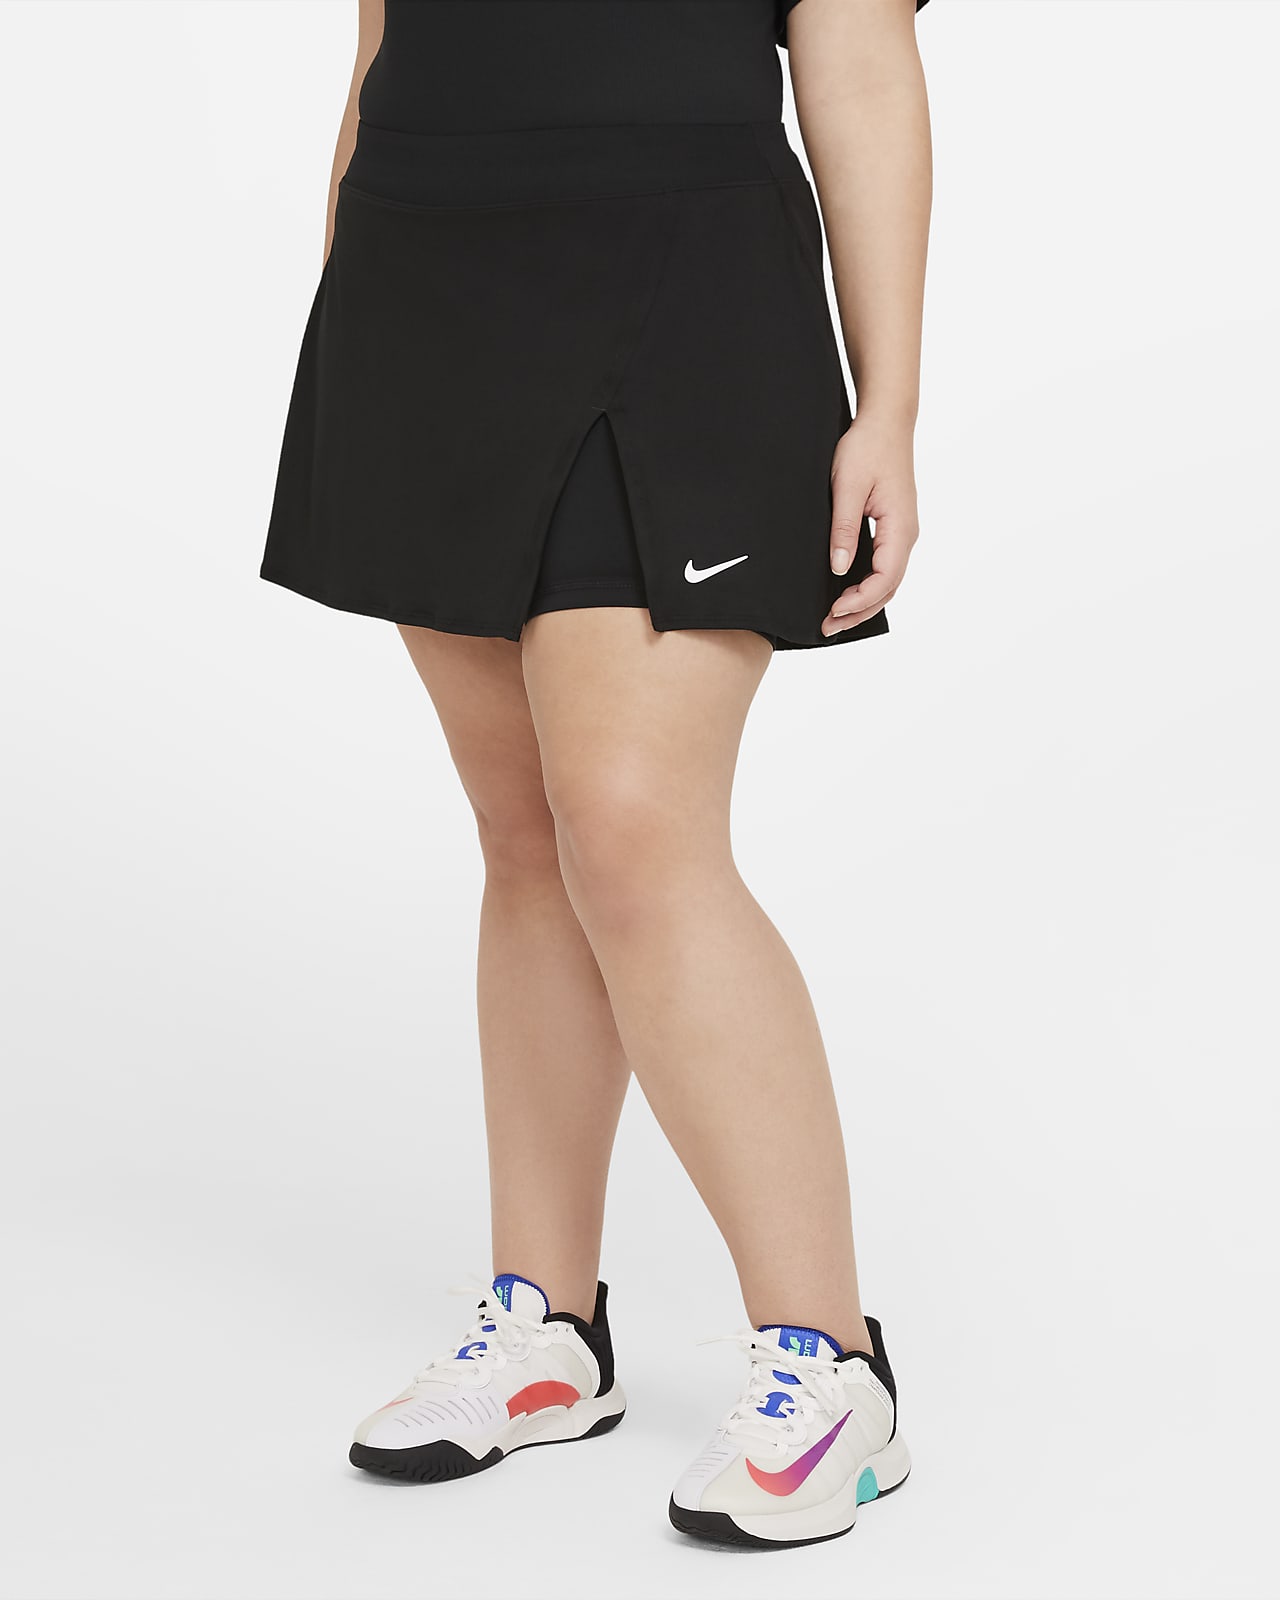 Gonna da tennis NikeCourt Victory (Plus size) - Donna